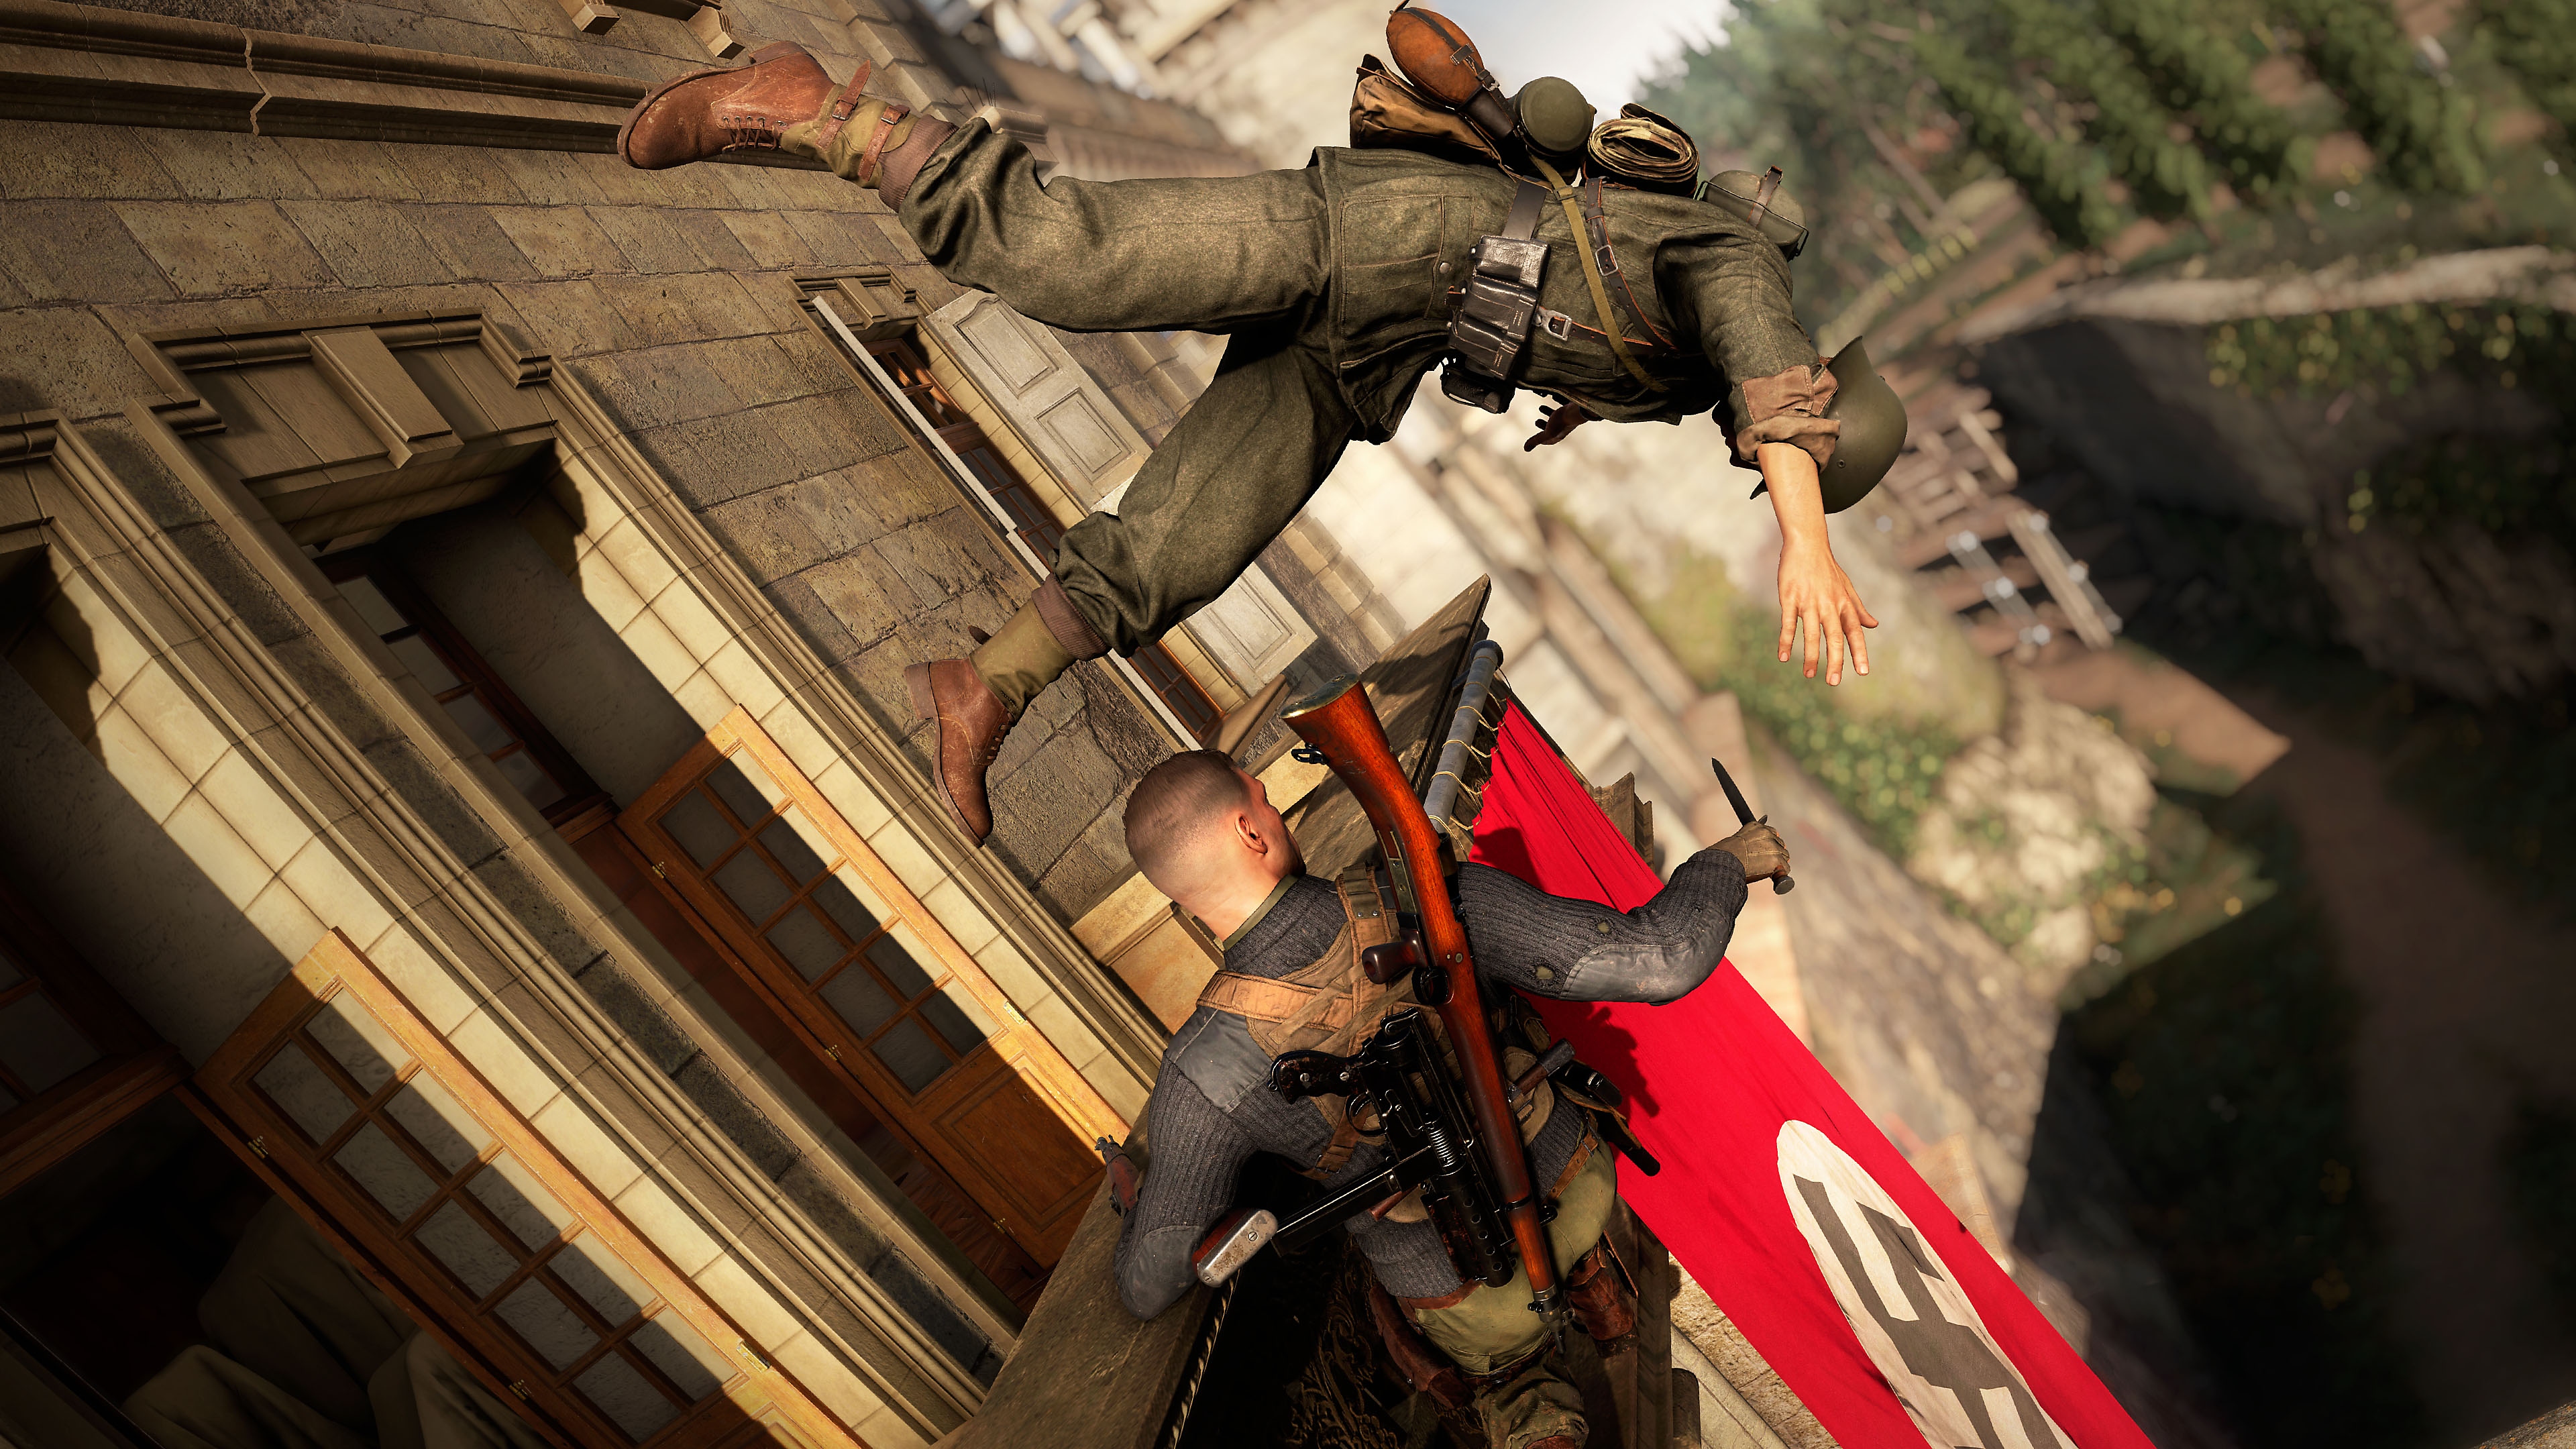 Captura de pantalla de Sniper Elite 5 que muestra a un enemigo cayéndose de un balcón